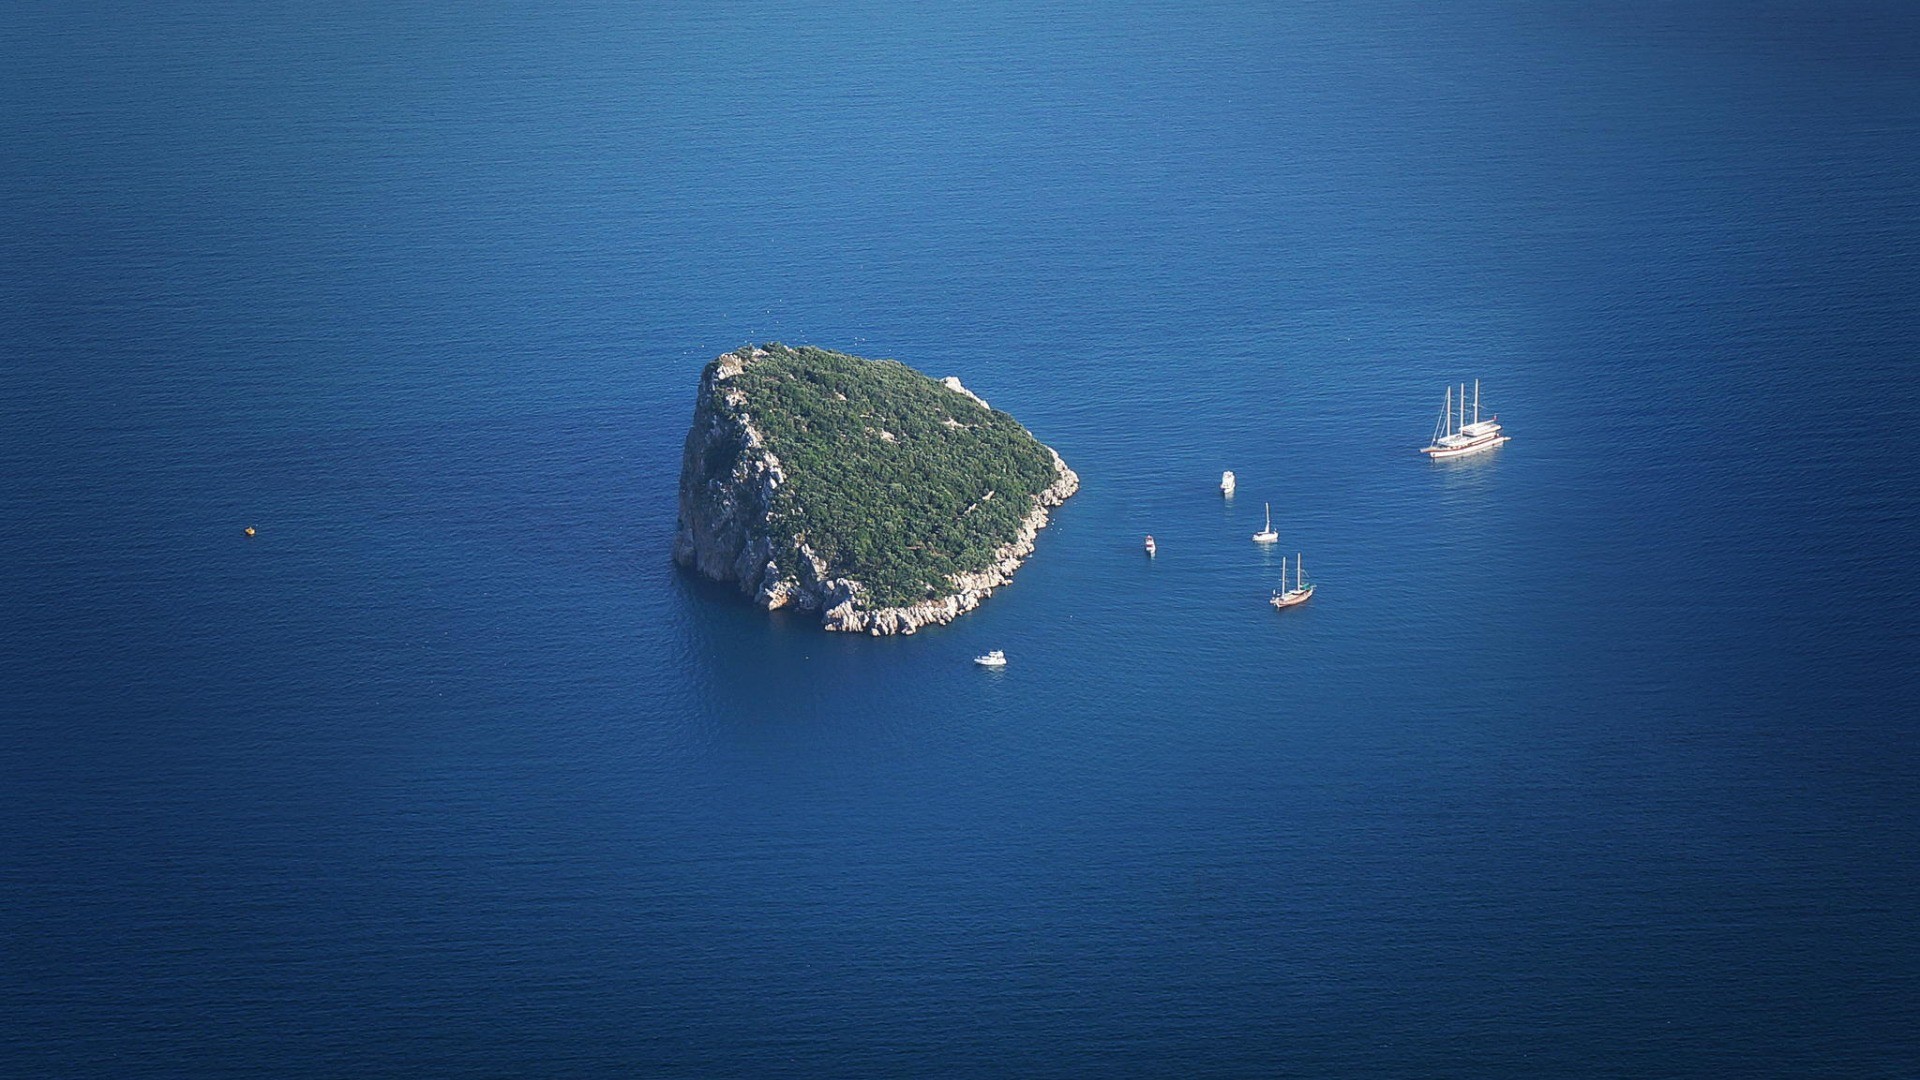 Nature Landscape Minimalism Water Sea Island Rock Boat Yachts Sailing Ship Blue Trees Aerial View Bi 1920x1080